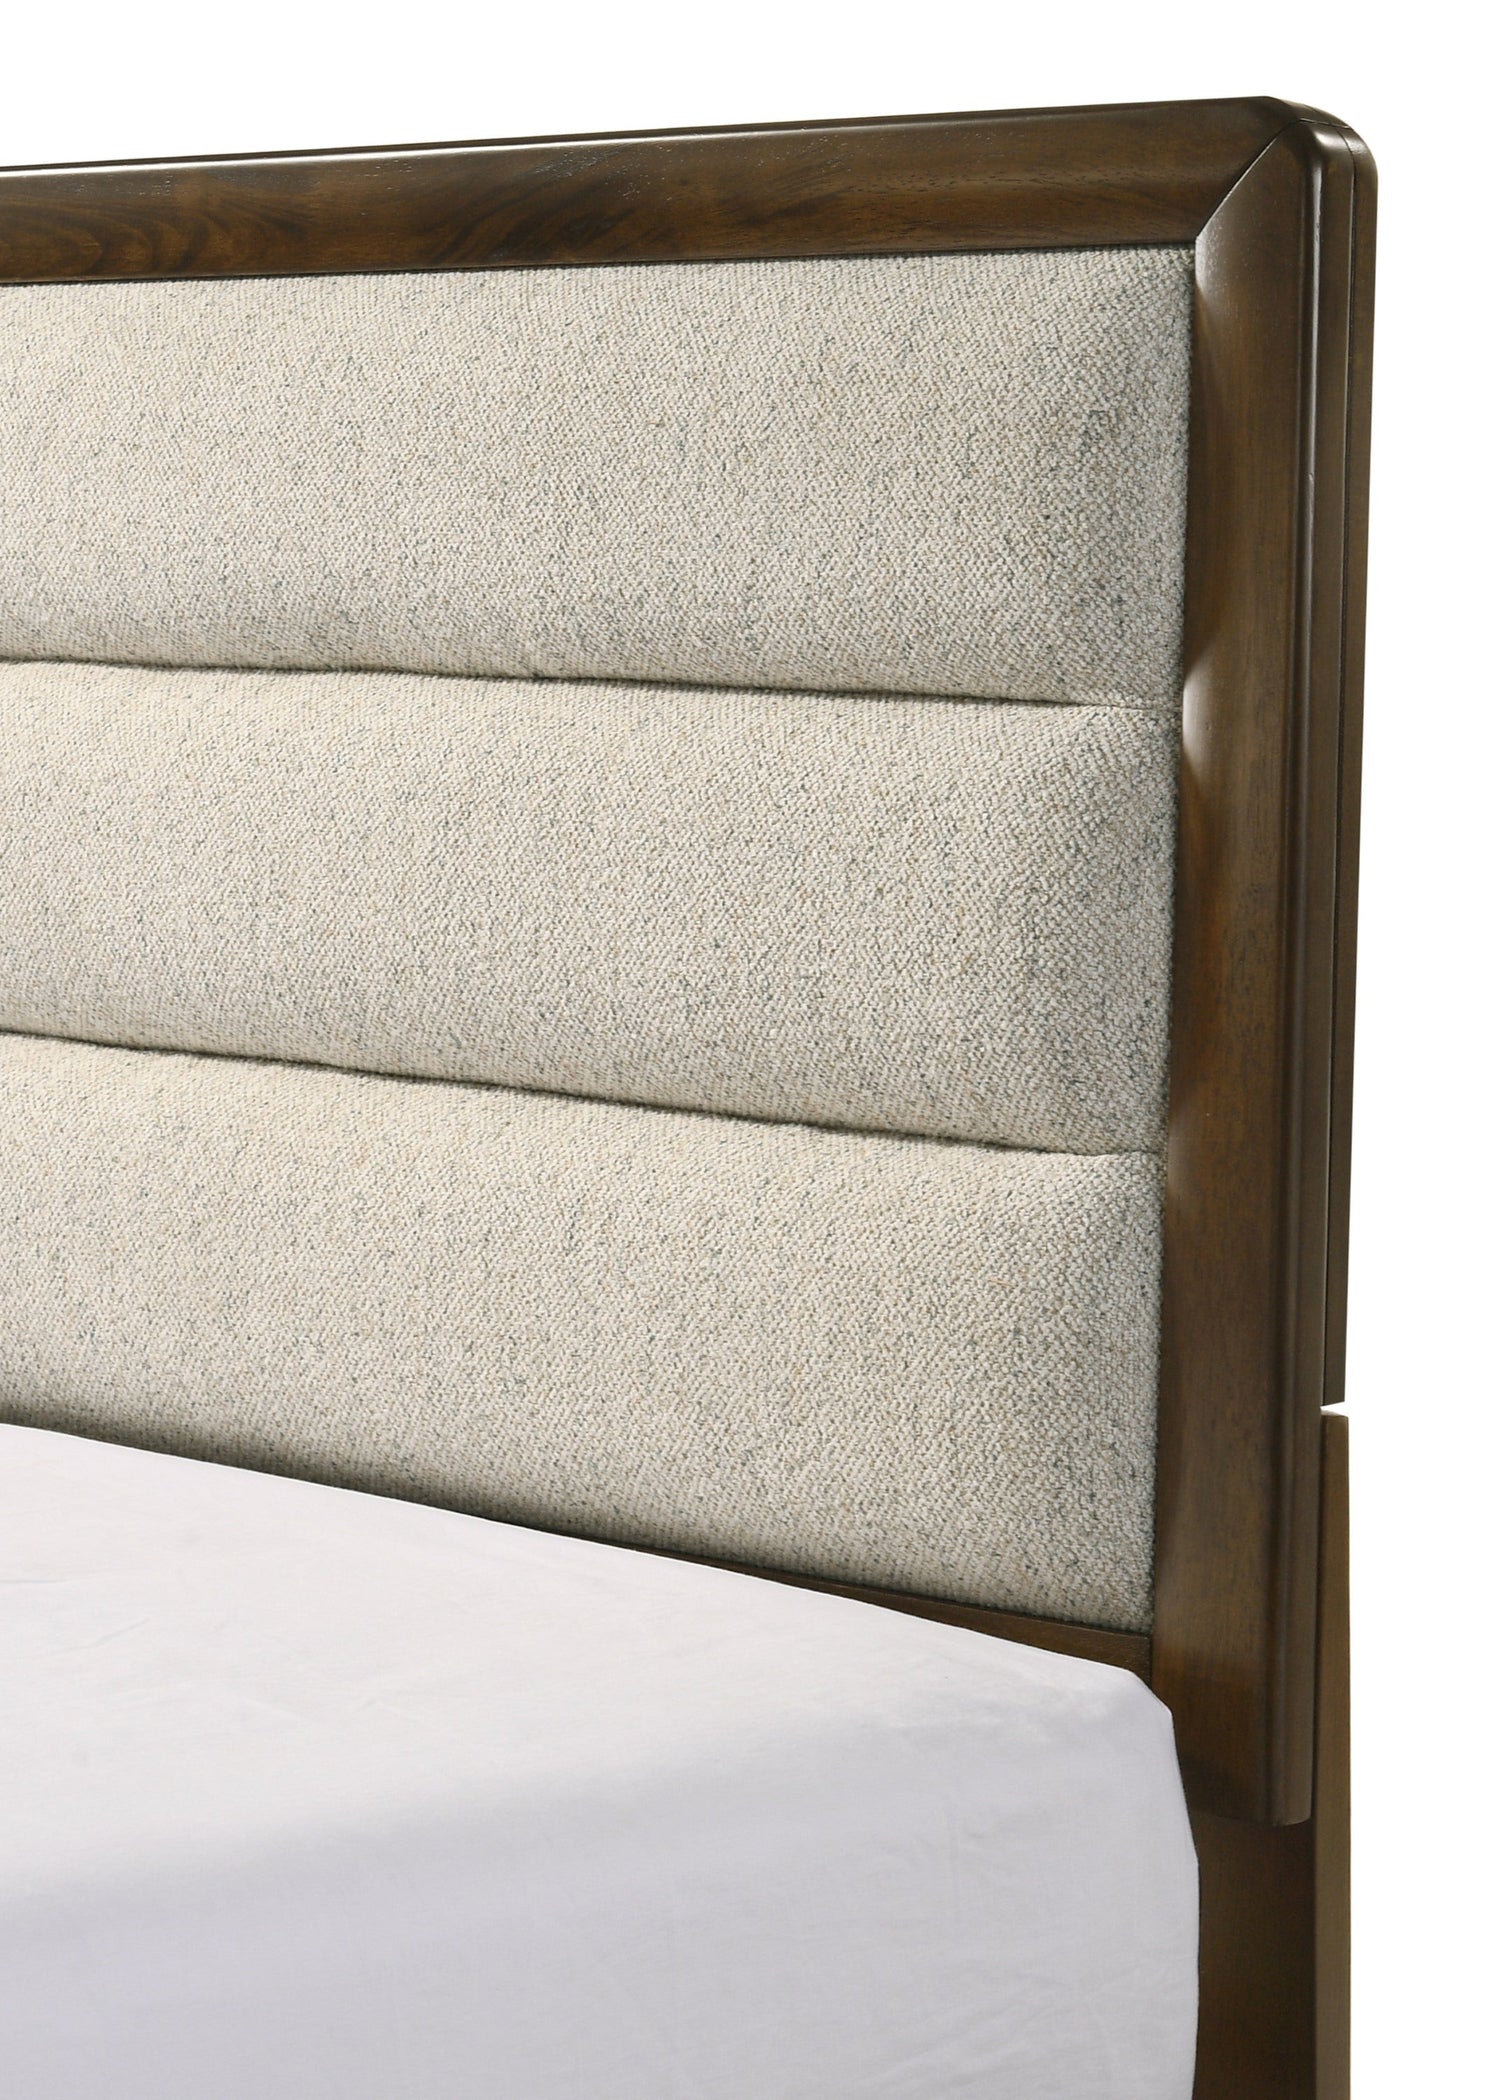 Coffield Brown King Upholstered Panel Bed - SET | B5530-K-HBFB | B5530-KQ-RAIL